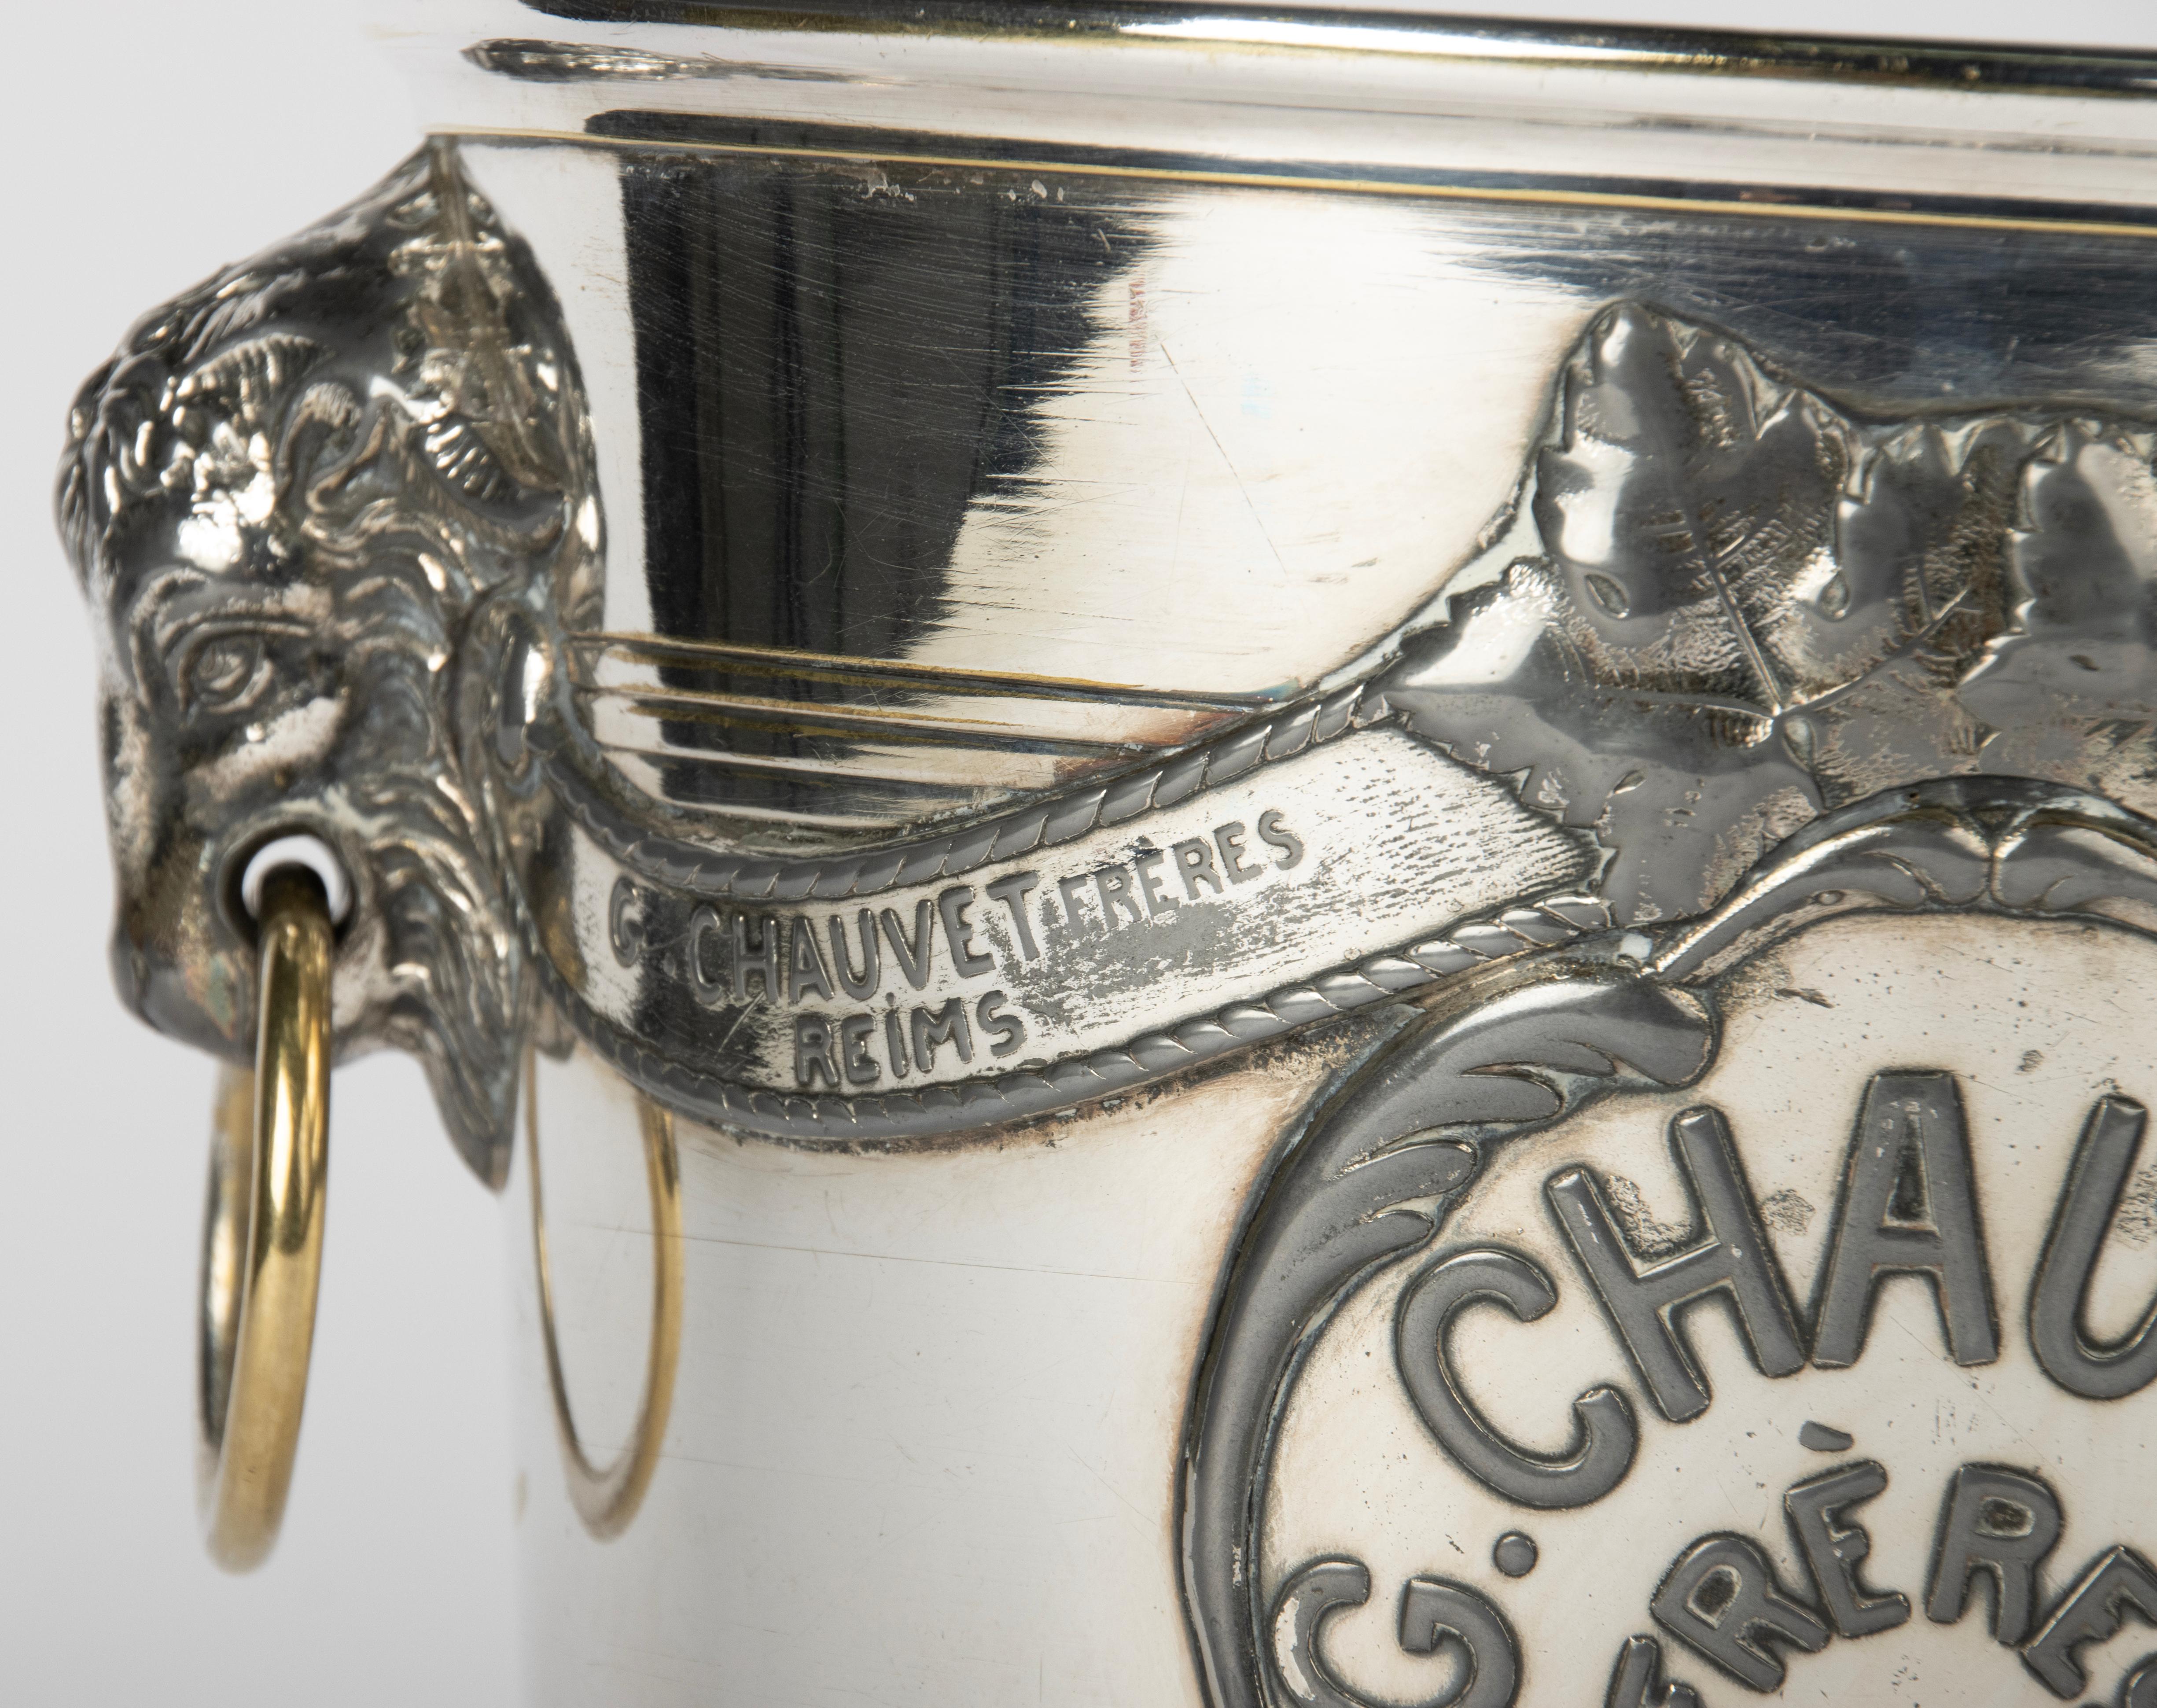 Antique Silver-Plated Champagne Cooler - Agit Paris for Maison G. Chauvet Reims In Fair Condition For Sale In Casteren, Noord-Brabant